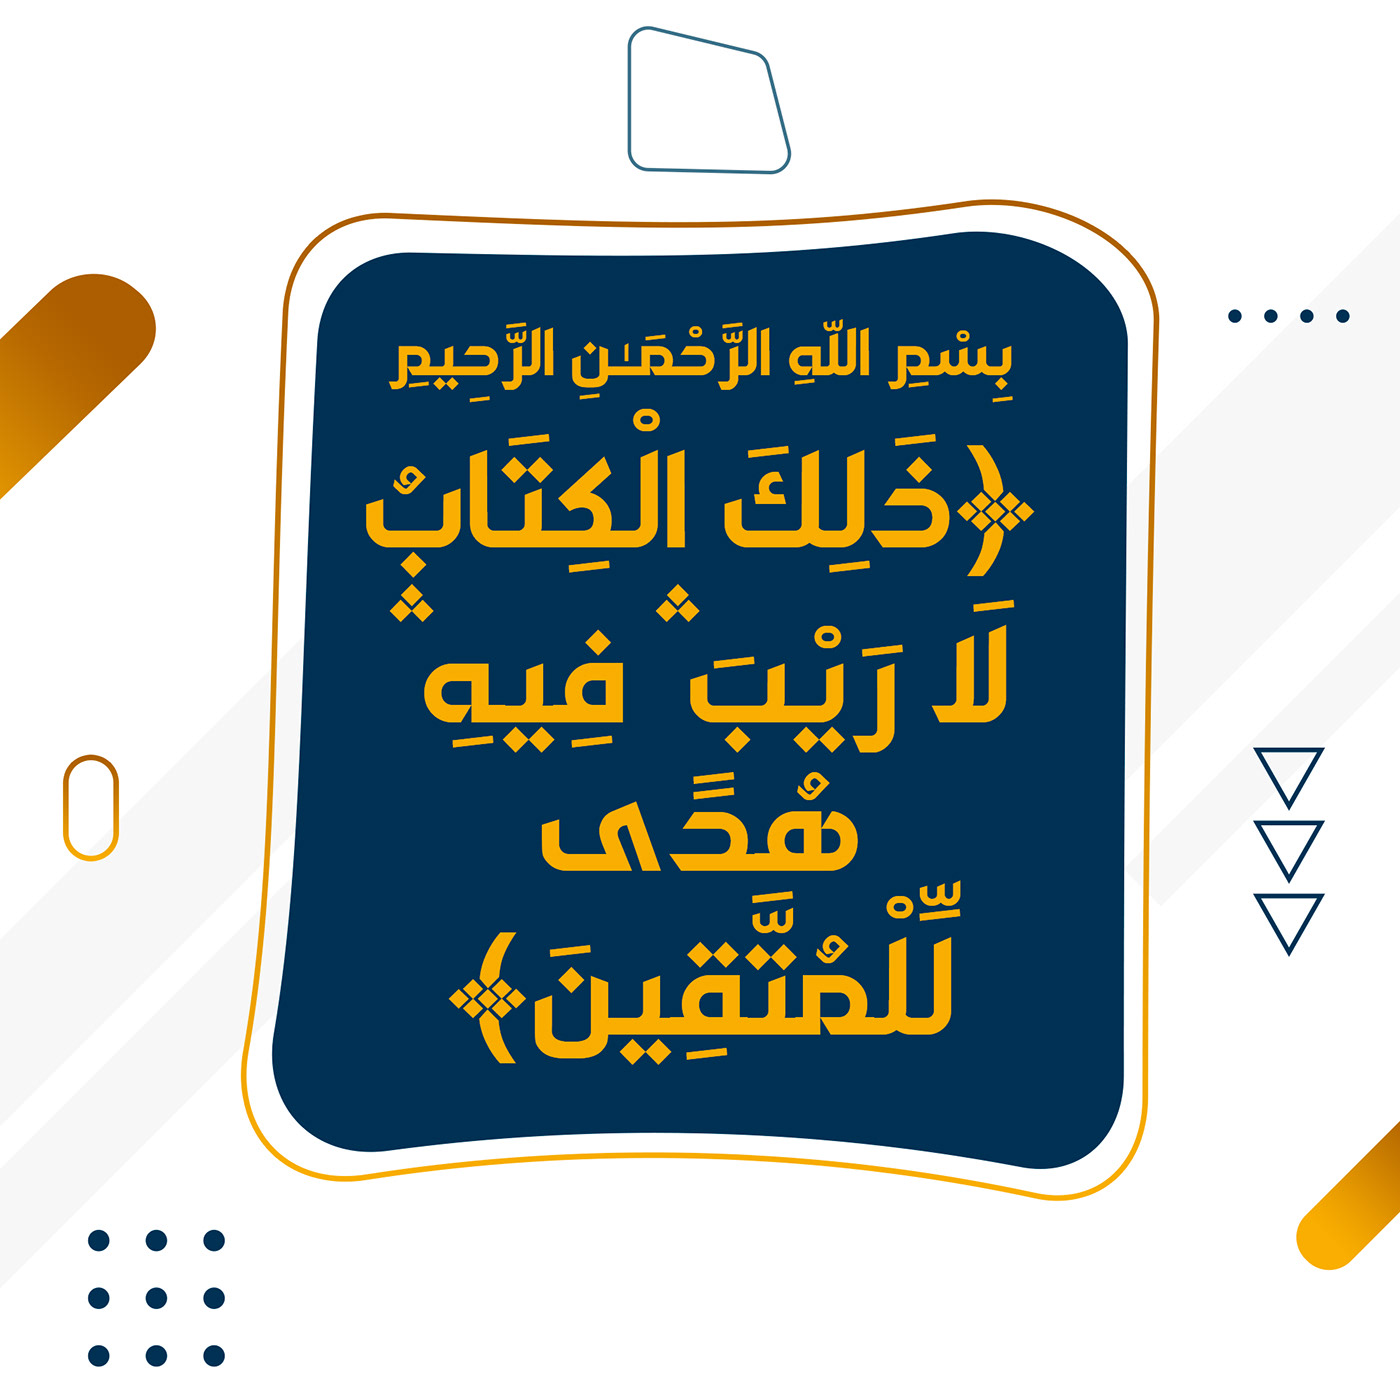 DG Heaven Free Font - arabic